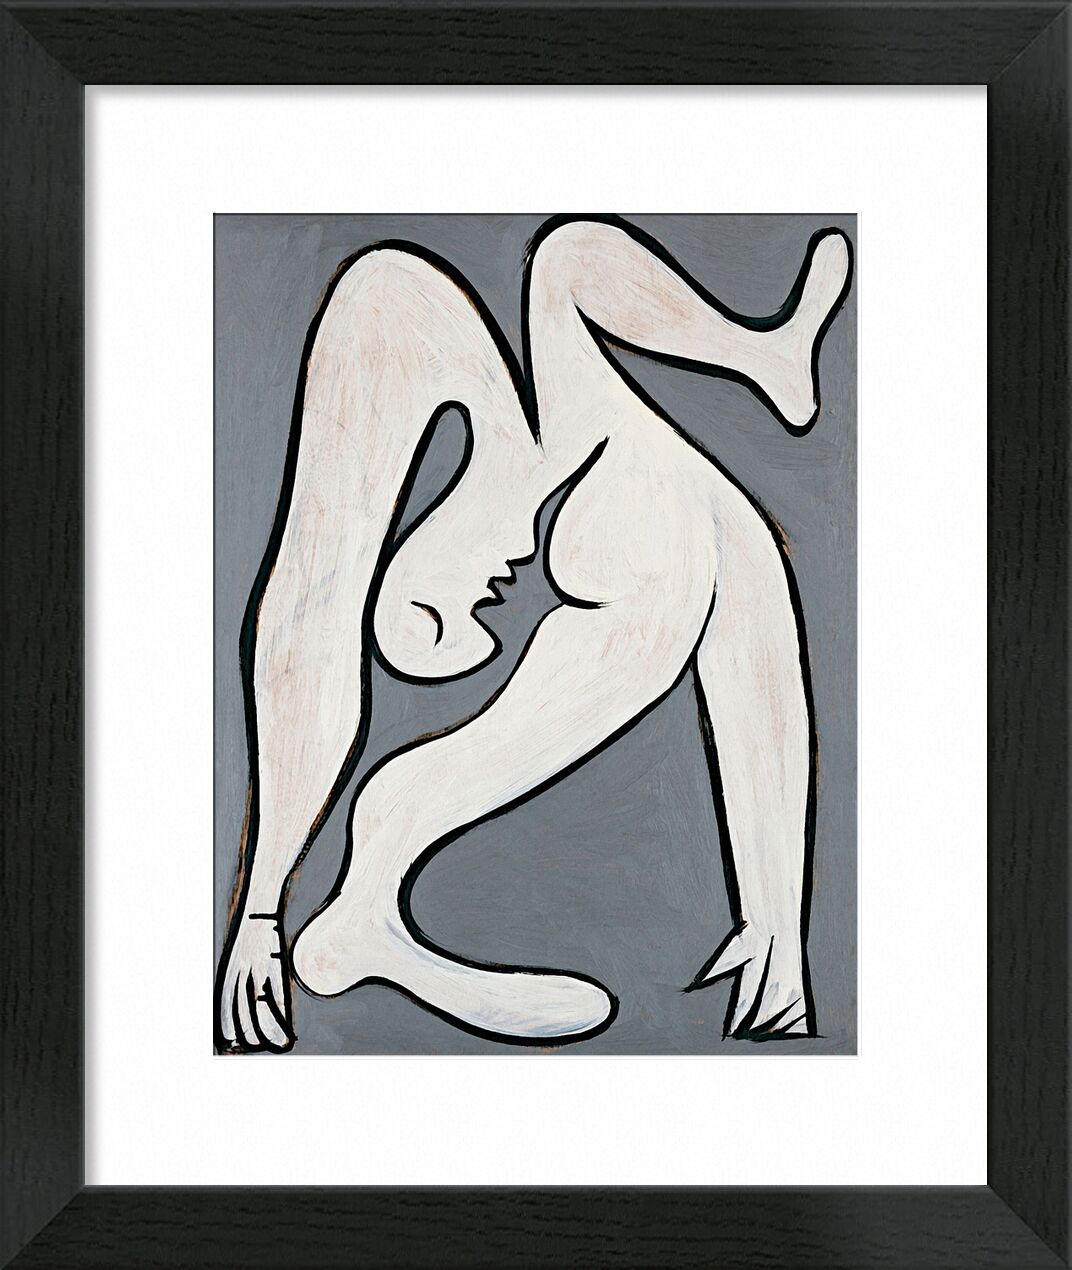 The Acrobat - Picasso desde Bellas artes, Prodi Art, Acróbata, dibujo, pintura, picasso